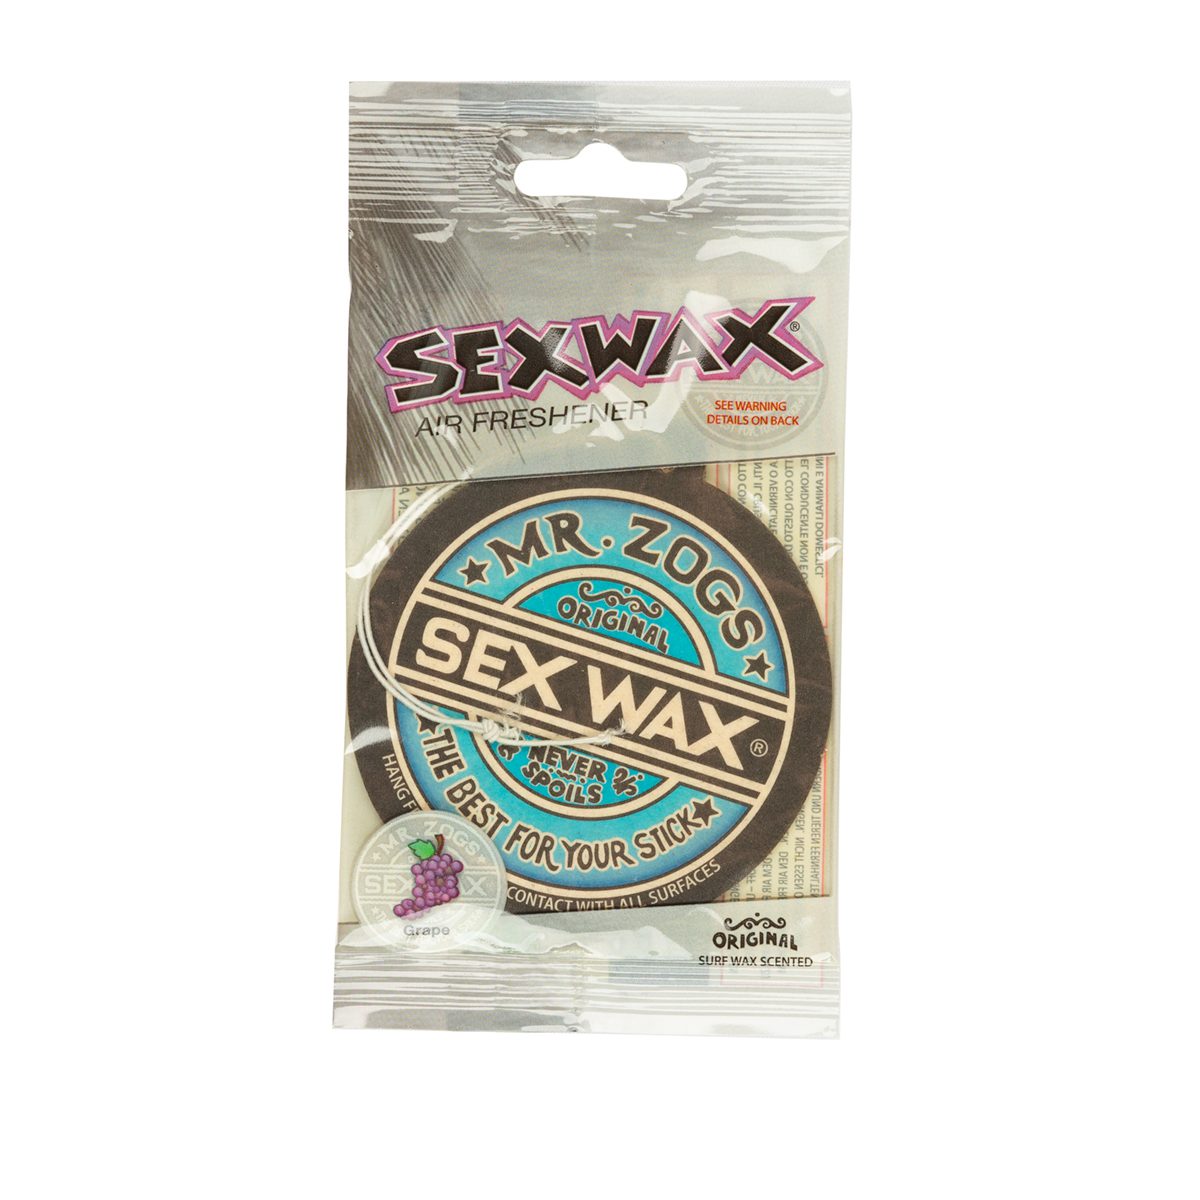 Sexwax Mr Zog’s Airfreshner (Pack 3)